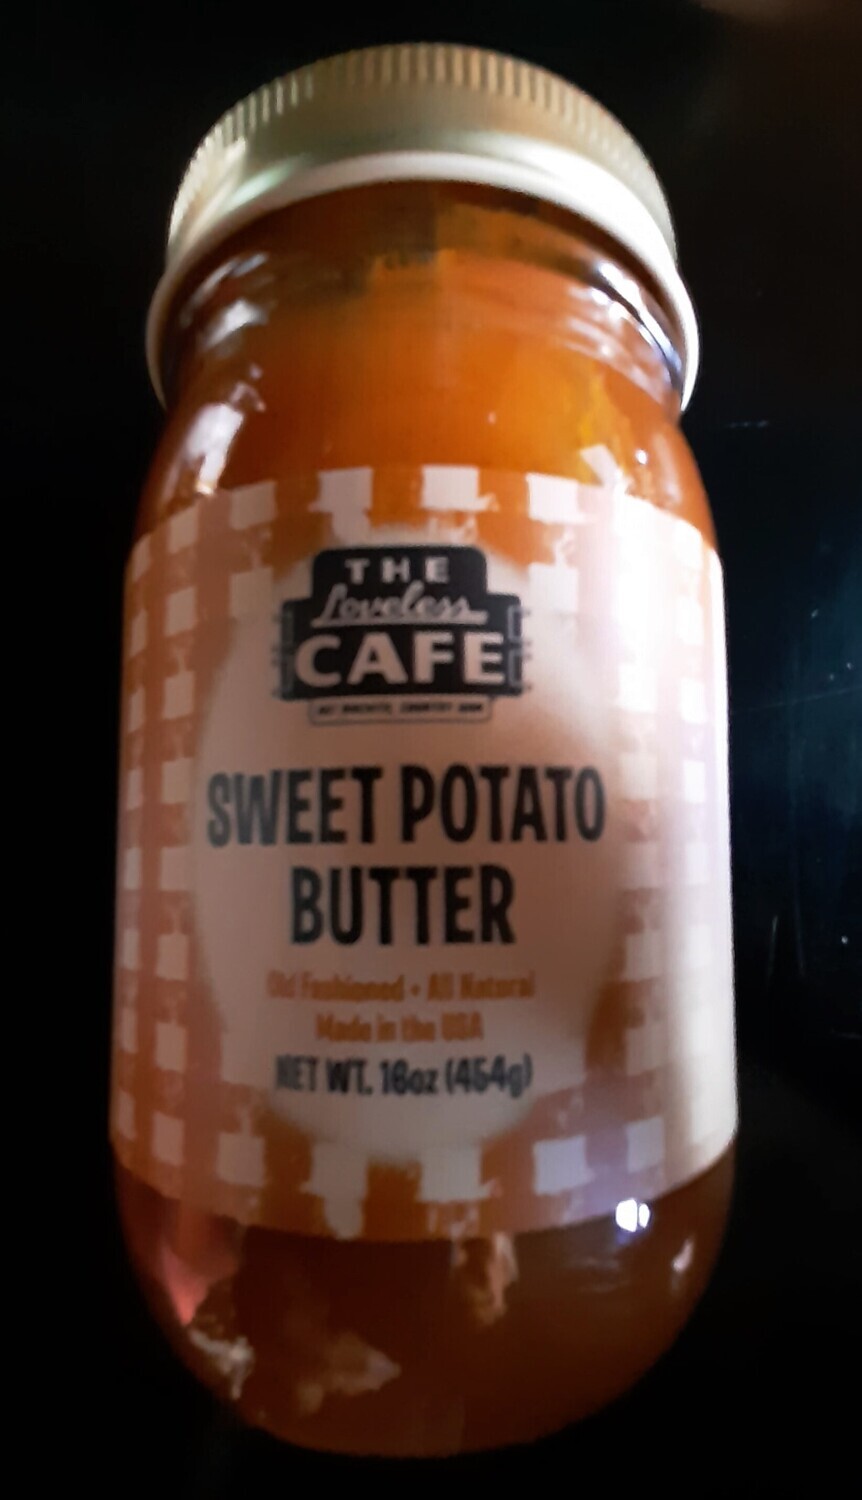 Loveless Cafe Sweet Potato Butter 16oz